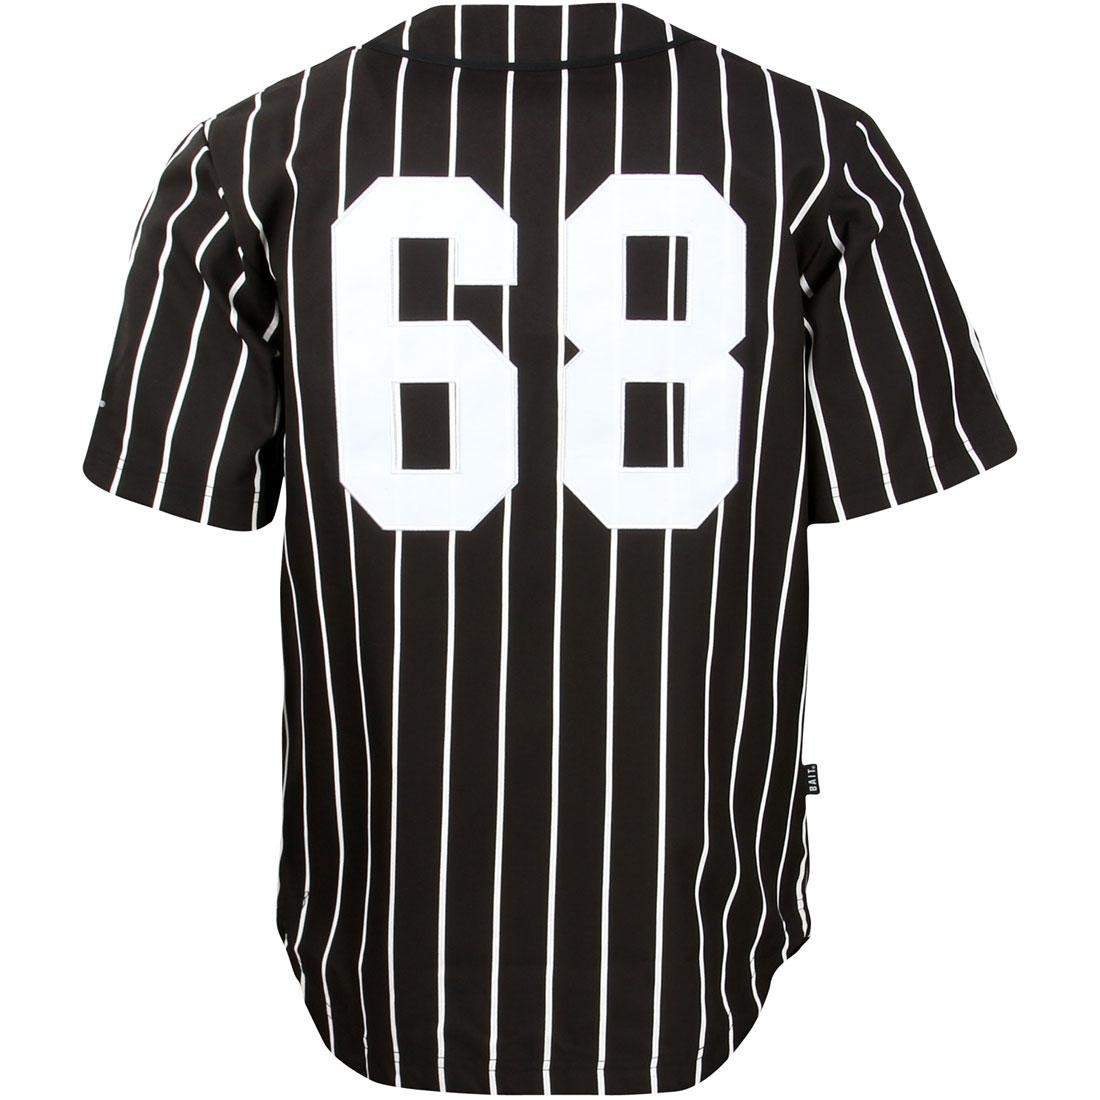 BAIT Men Sluggers Baseball Jersey - Pinstripe black white pinstripe